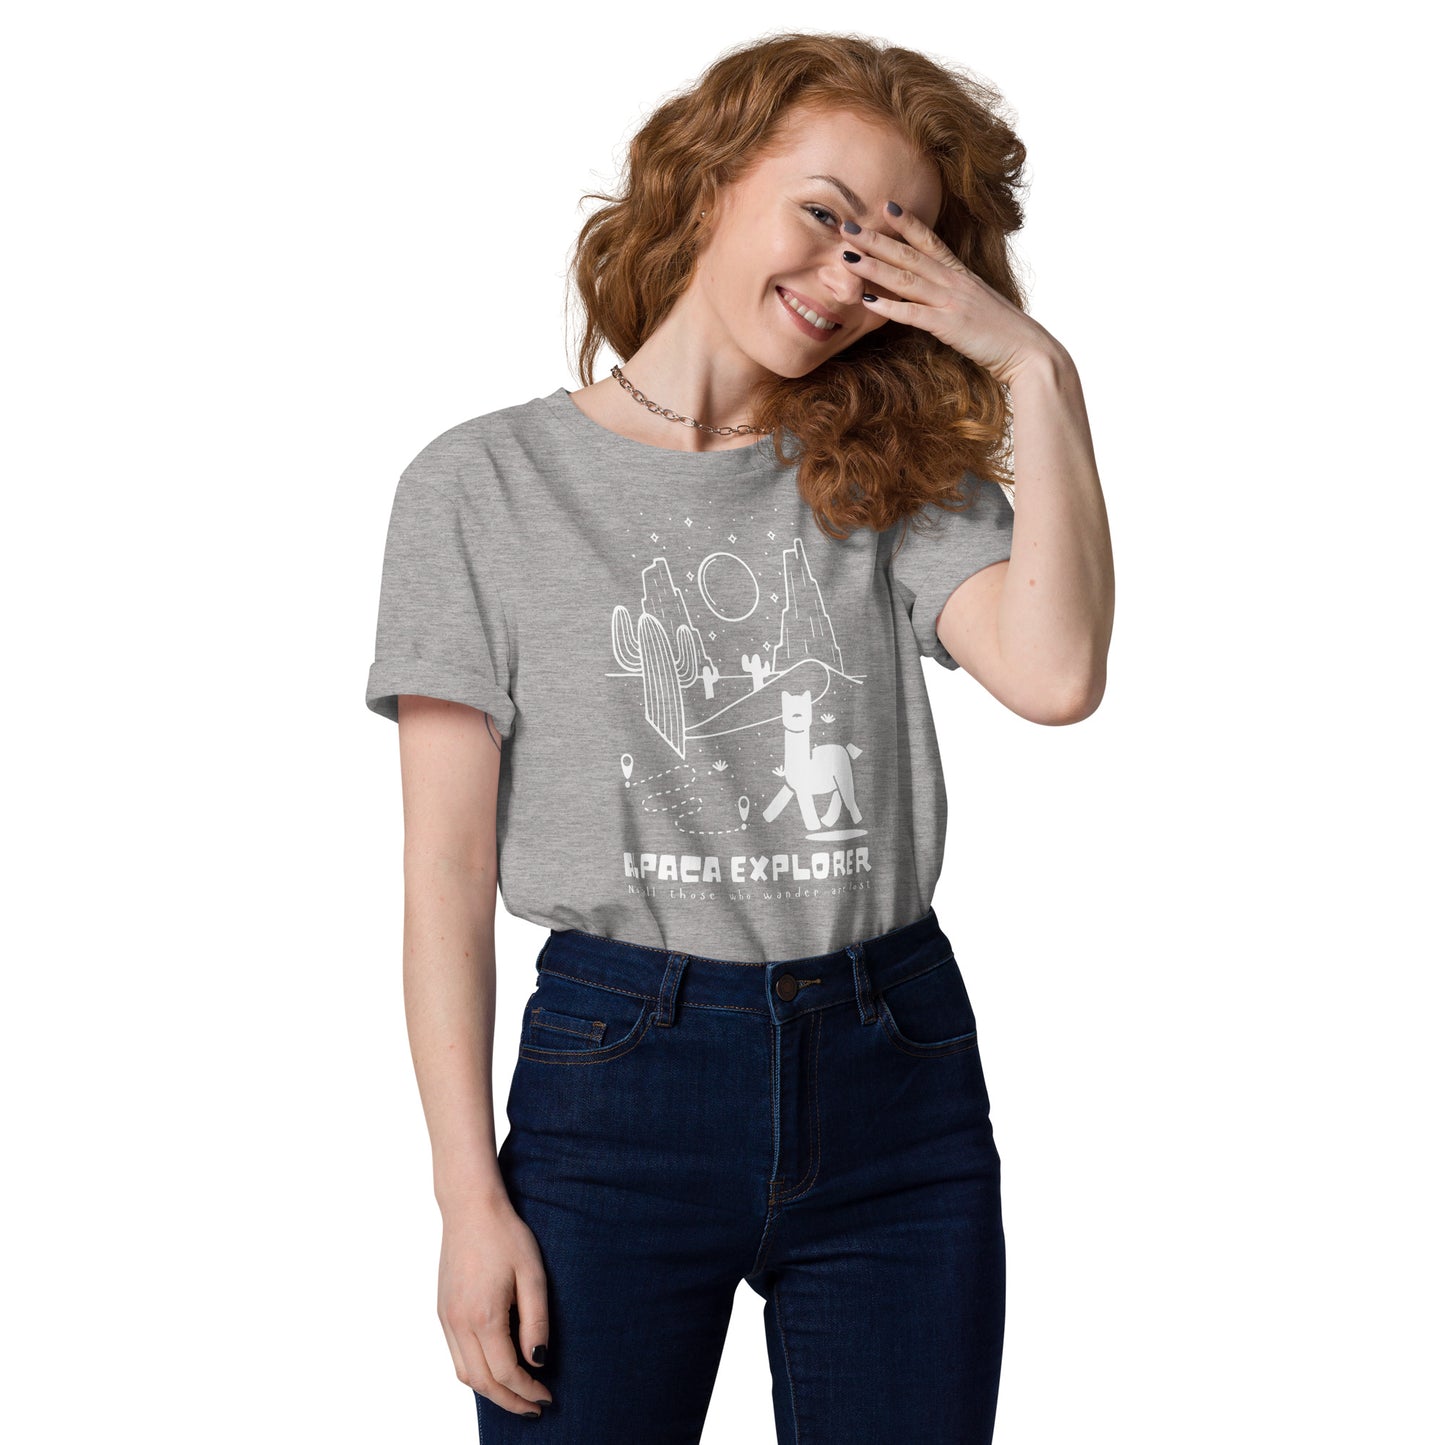 Alpaca Explorer Unisex Organic Cotton T-shirt